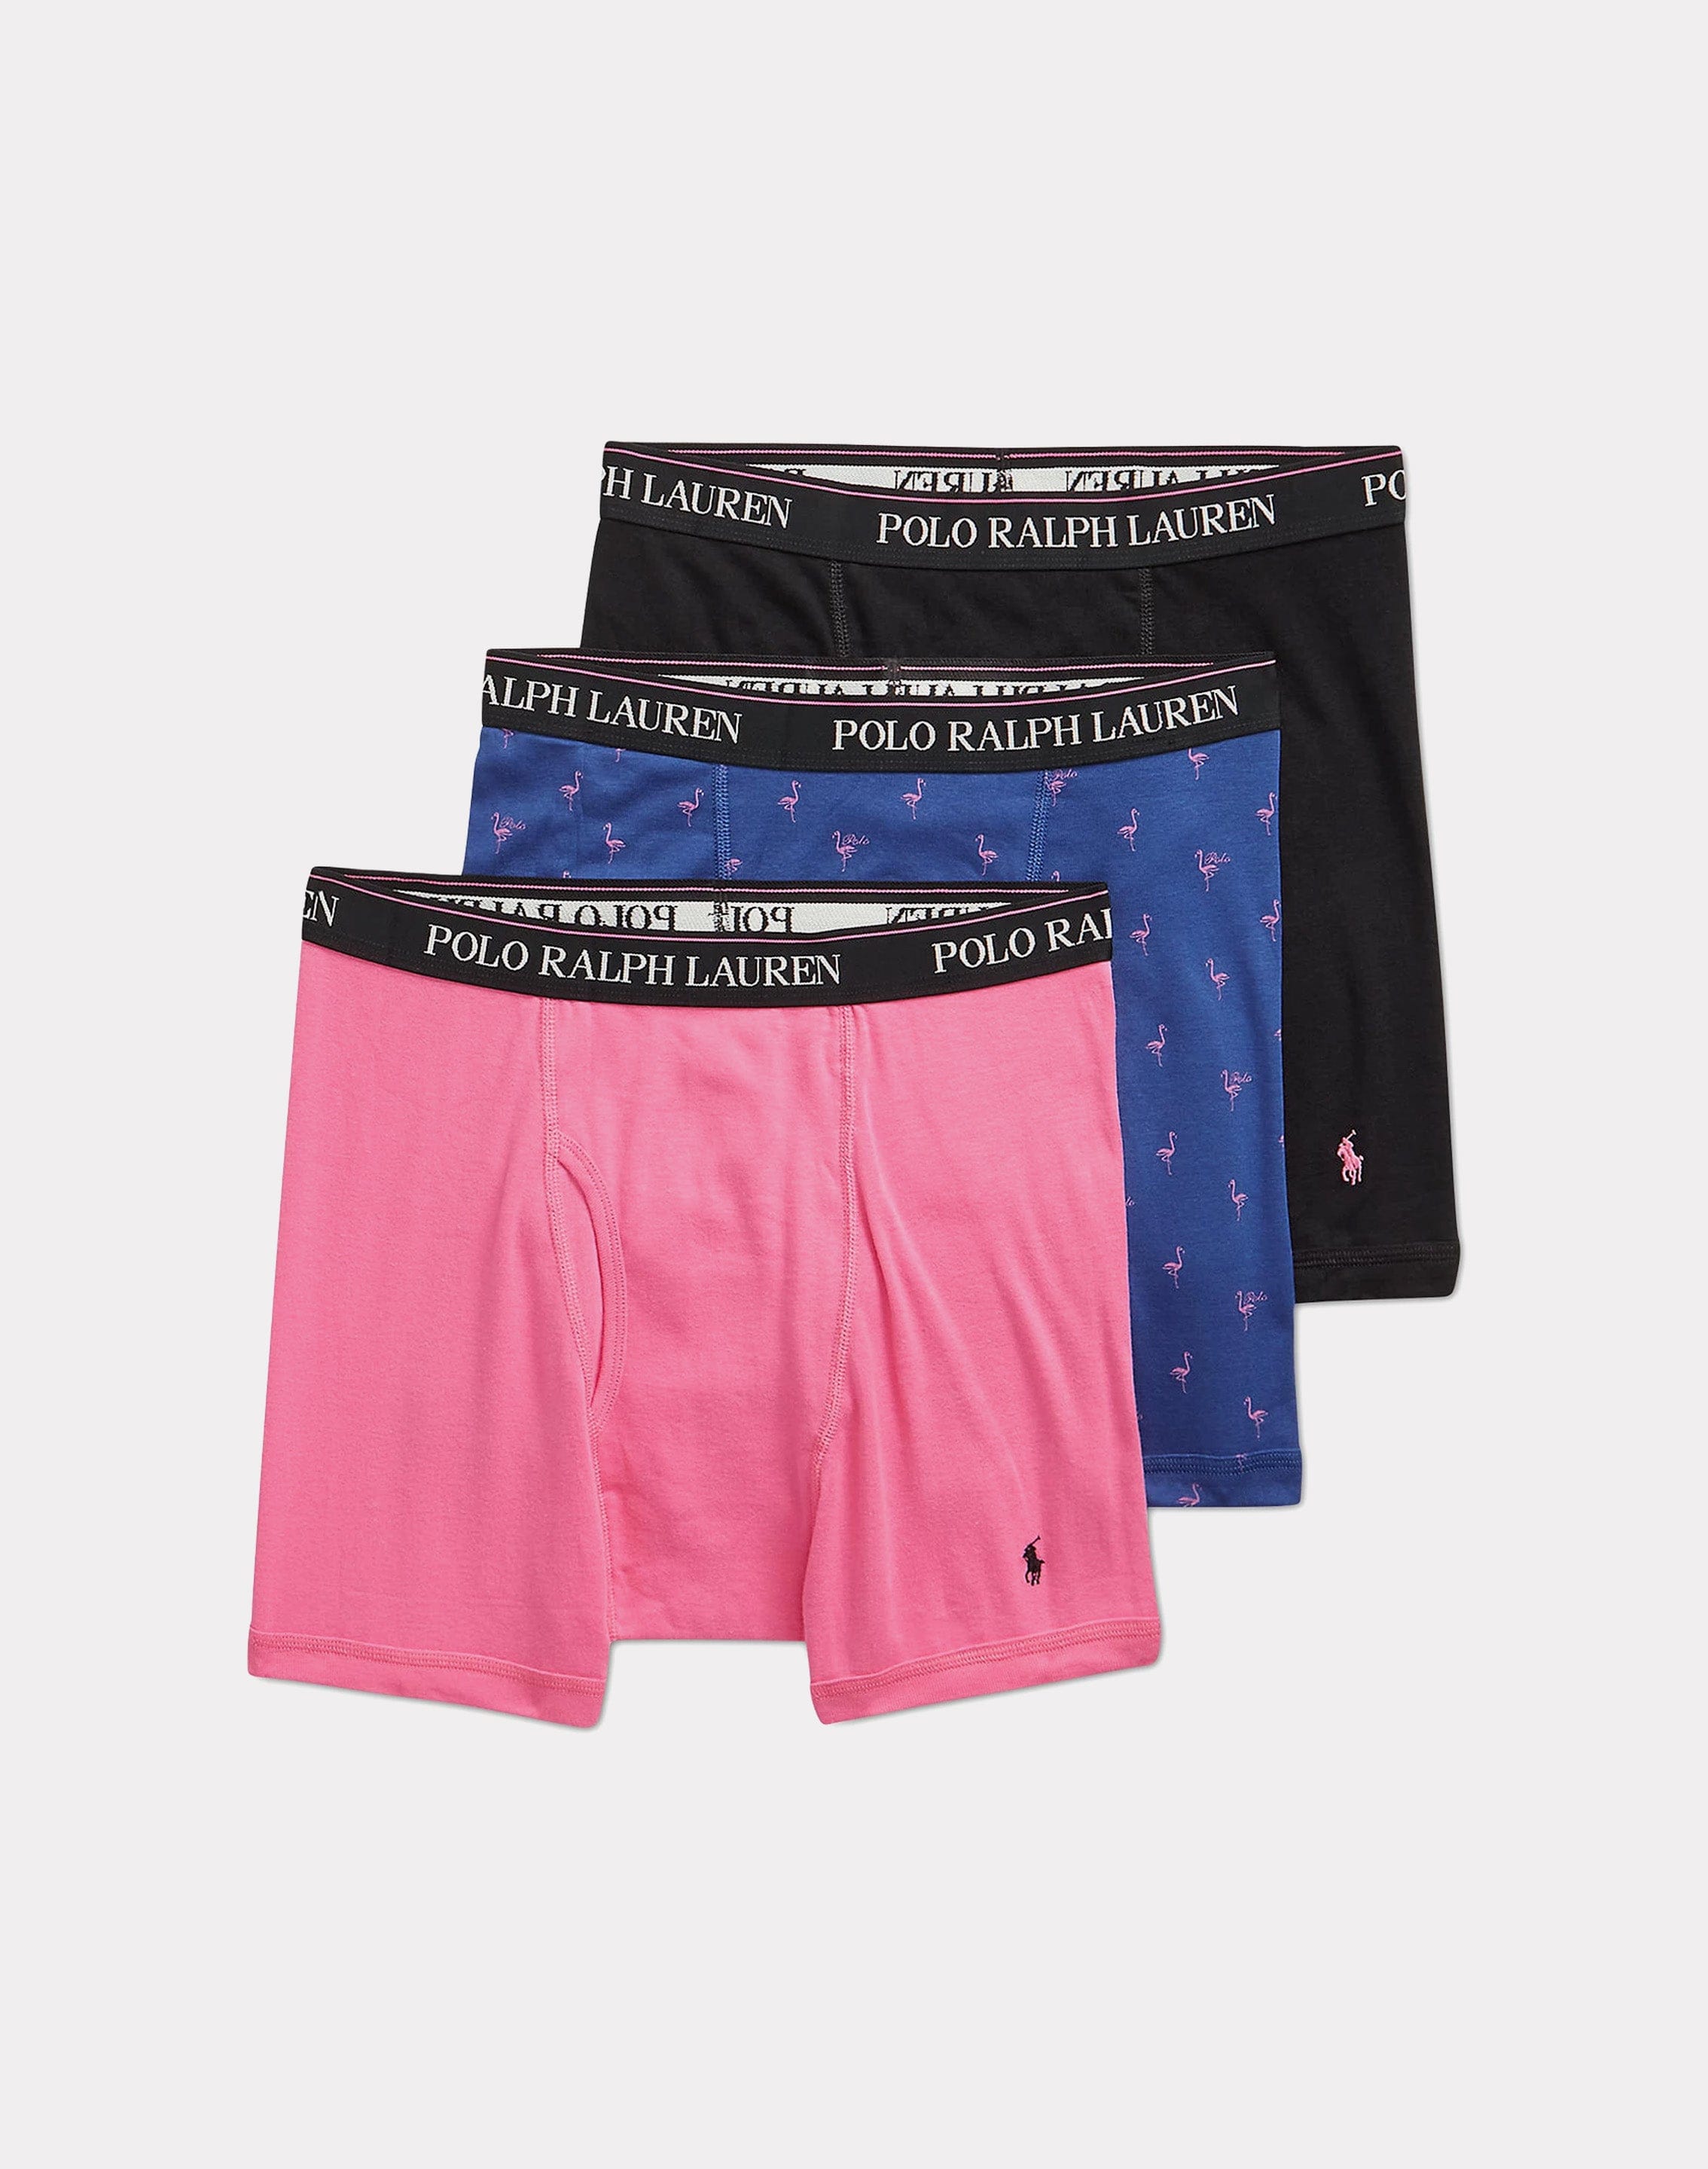  Polo Ralph Lauren Men Underwear